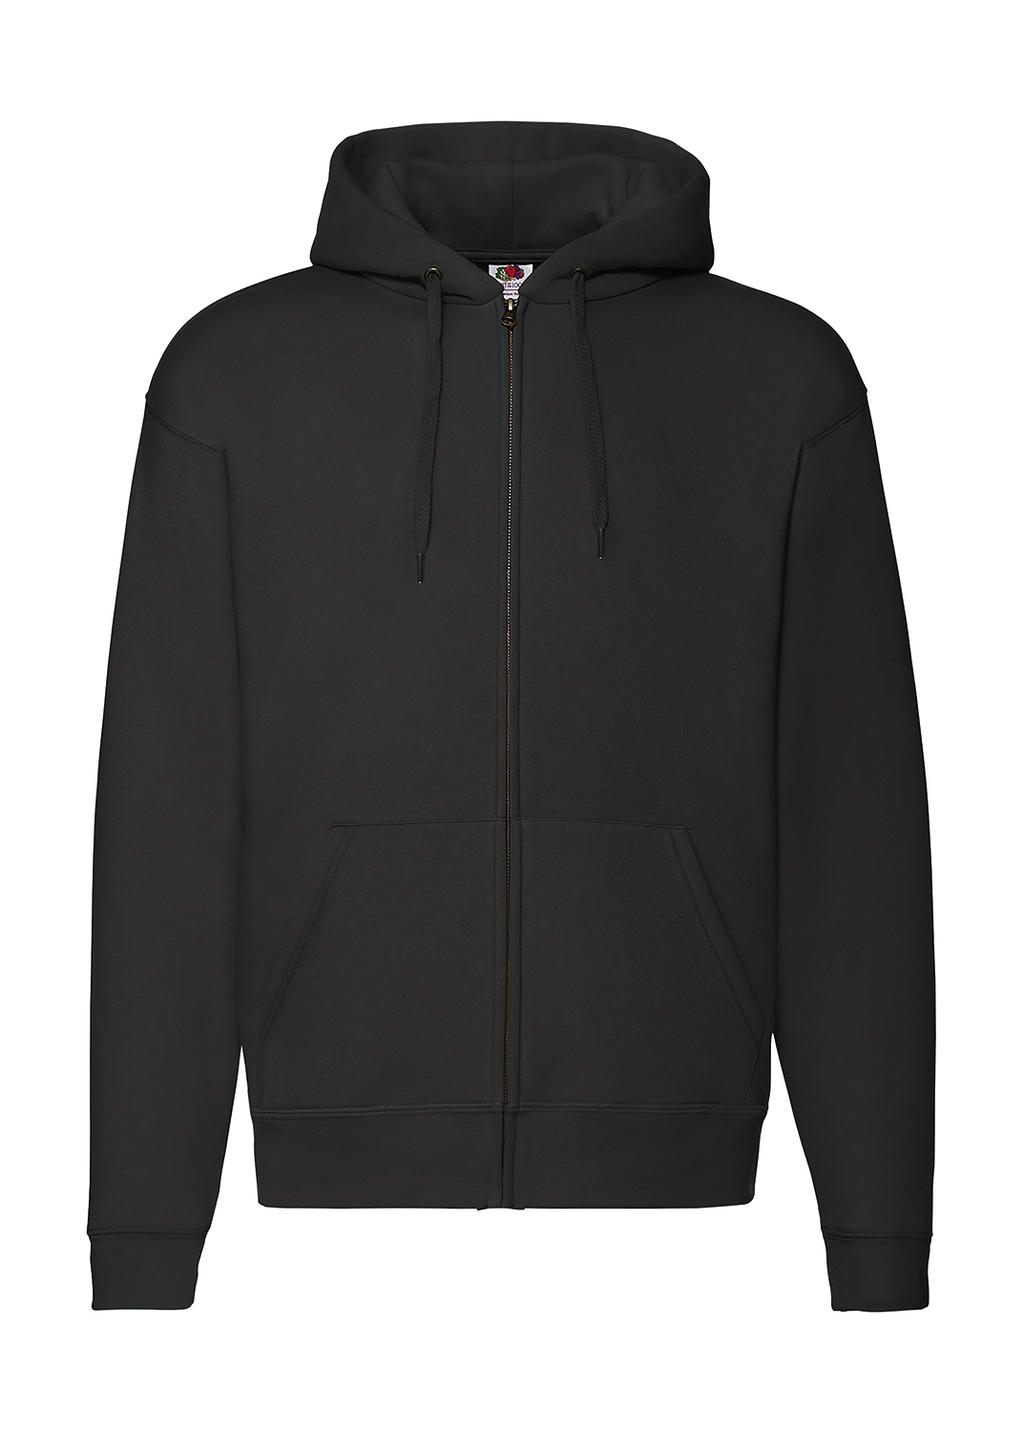  Premium Hooded Zip Sweat in Farbe Black